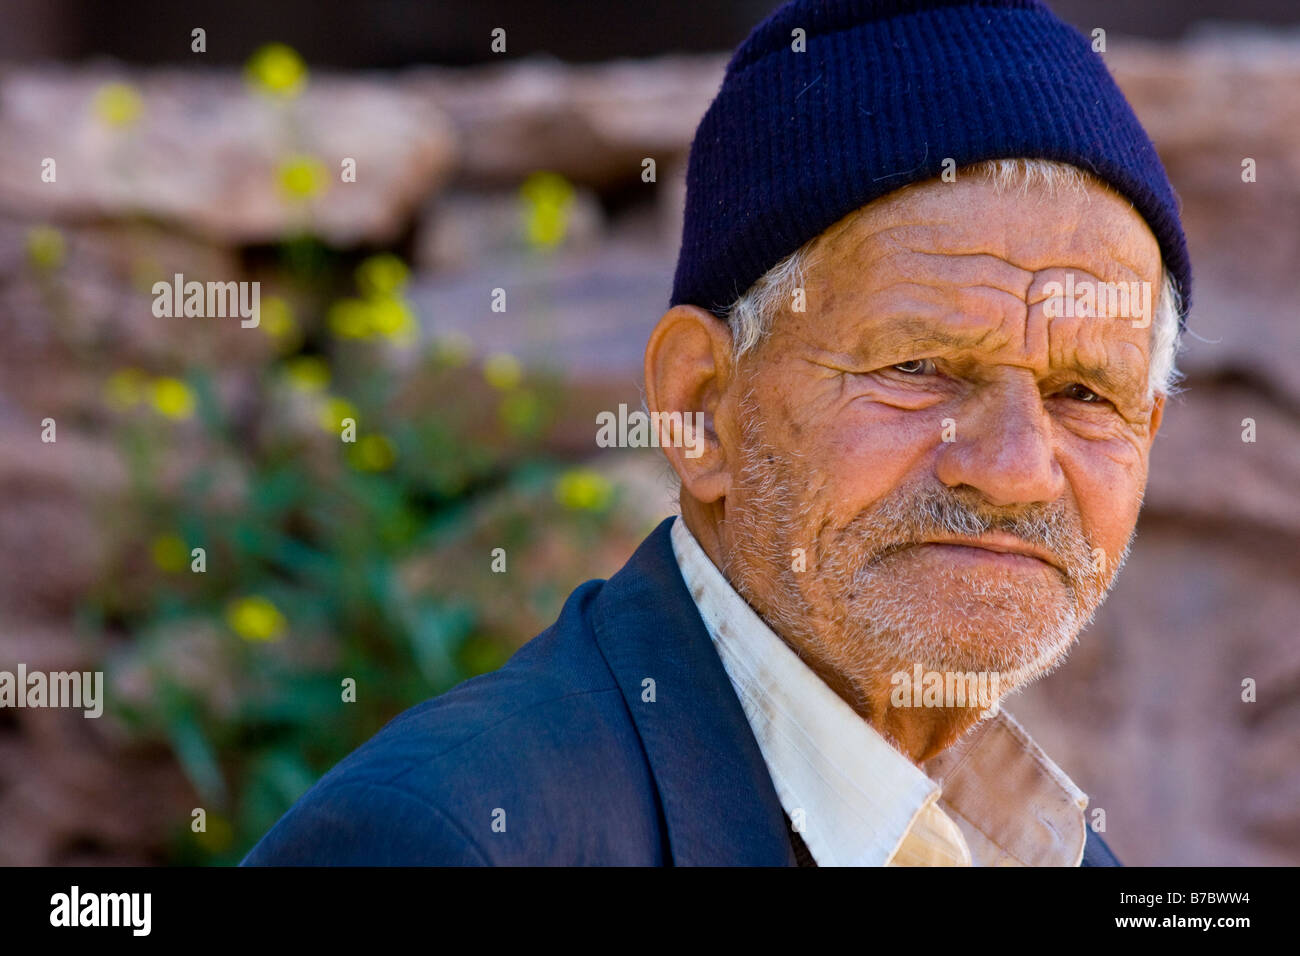 Local Man in Abiyaneh or Abyaneh Iran Stock Photo